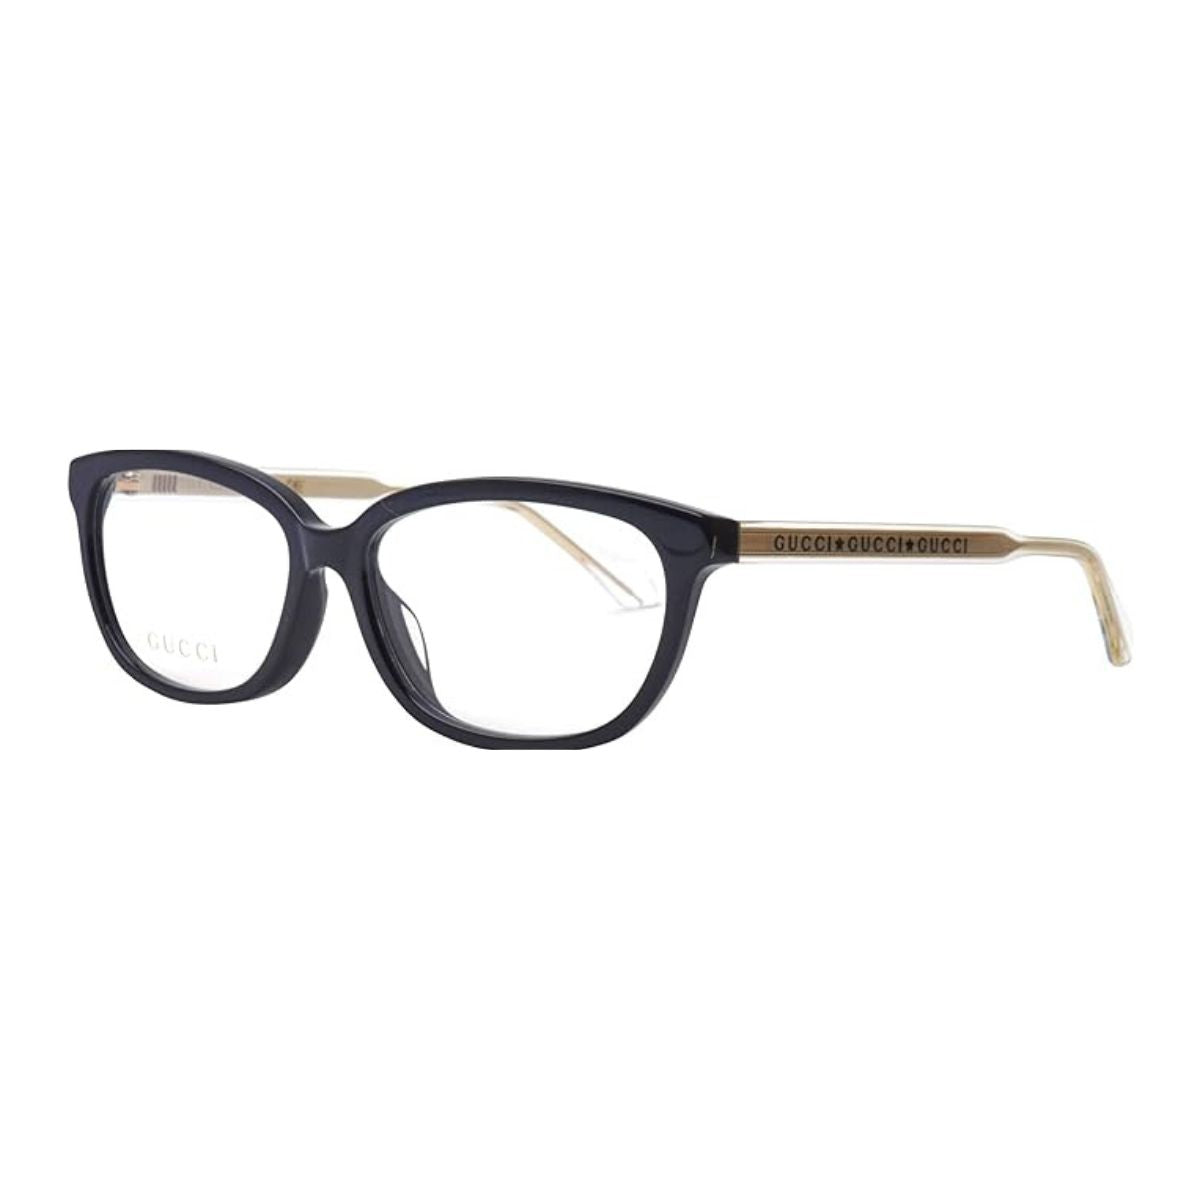 "Gucci 0568OA 001 cat eye glasses frame for women's online at optorium"